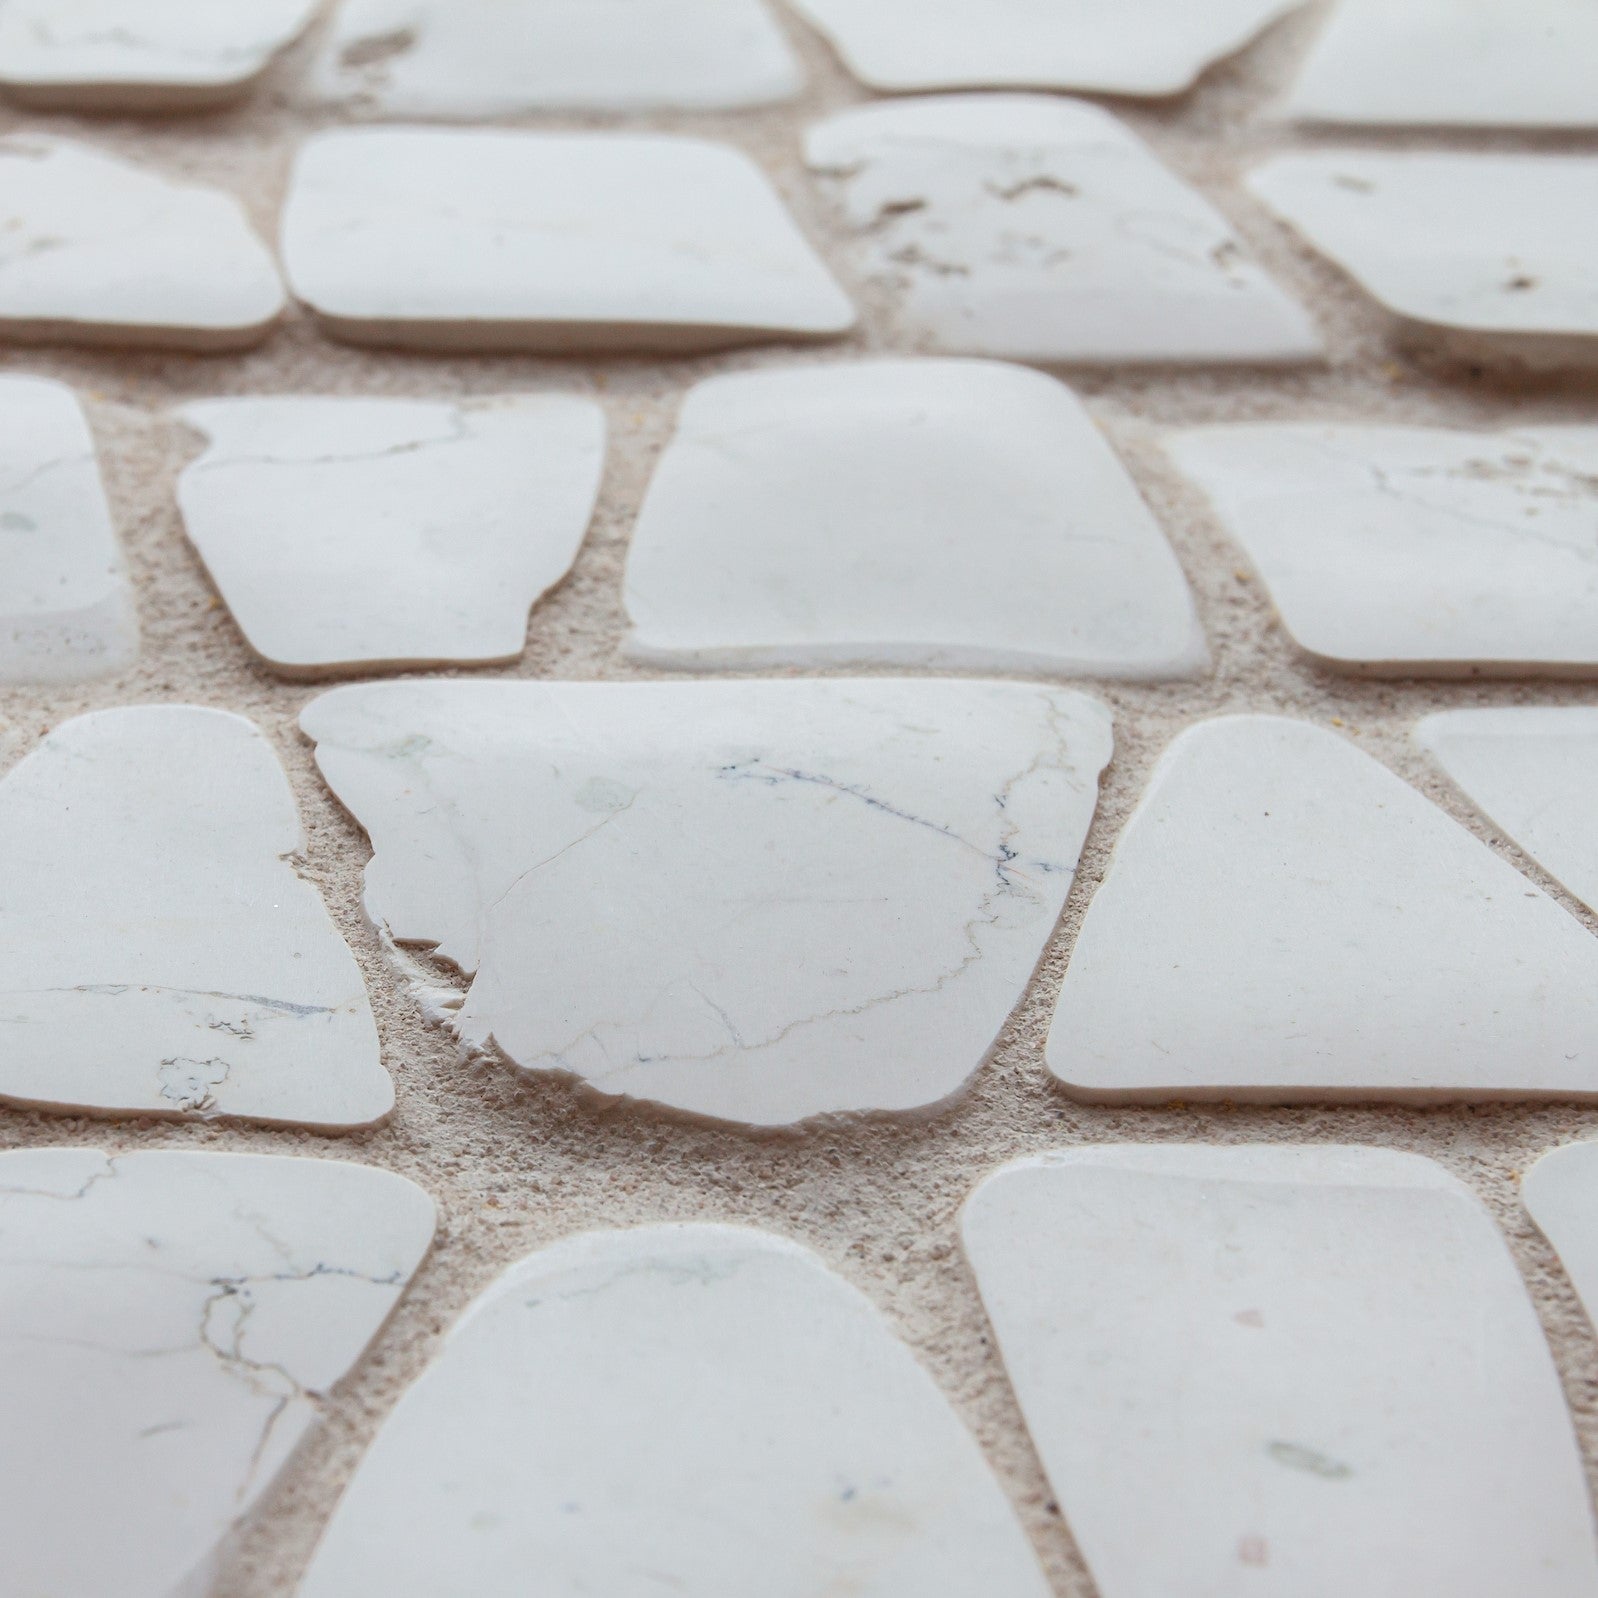 giovanni barbieri timeworn bianco antico natural white marble irregular handcut pattern mosaic distributed by surface group international